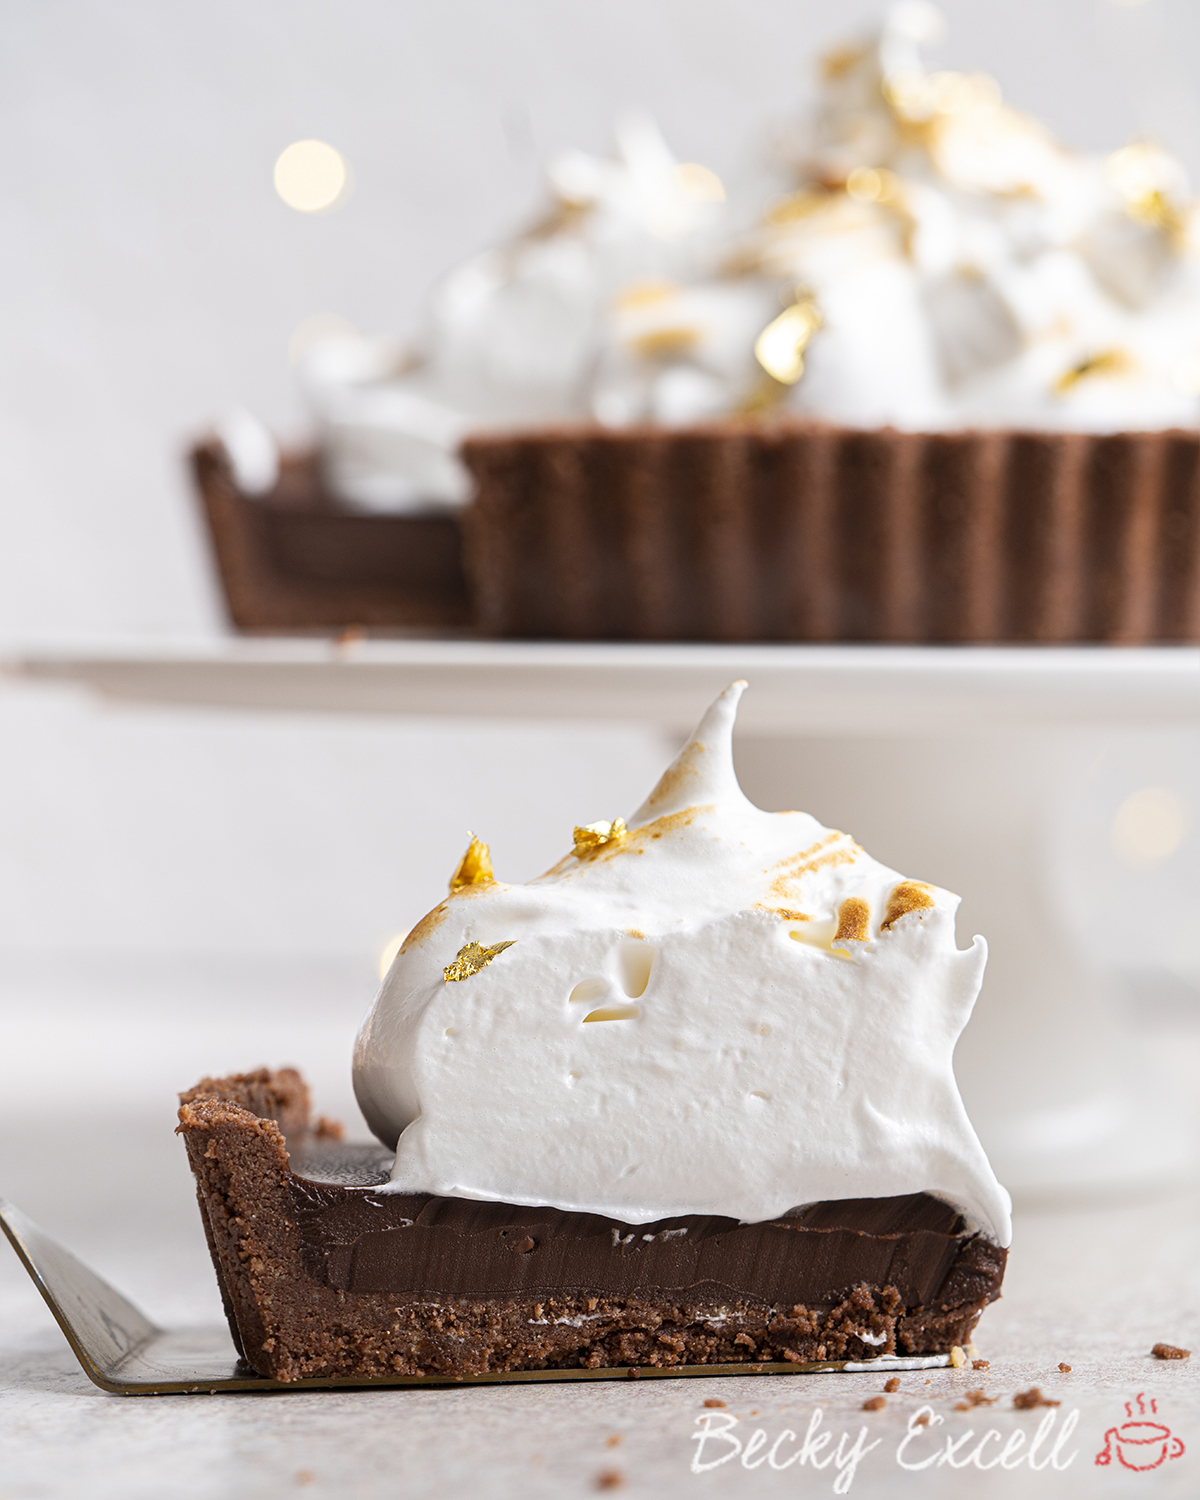 30 Gluten-free Christmas Dessert Recipes You NEED To Make: chocolate meringue pie